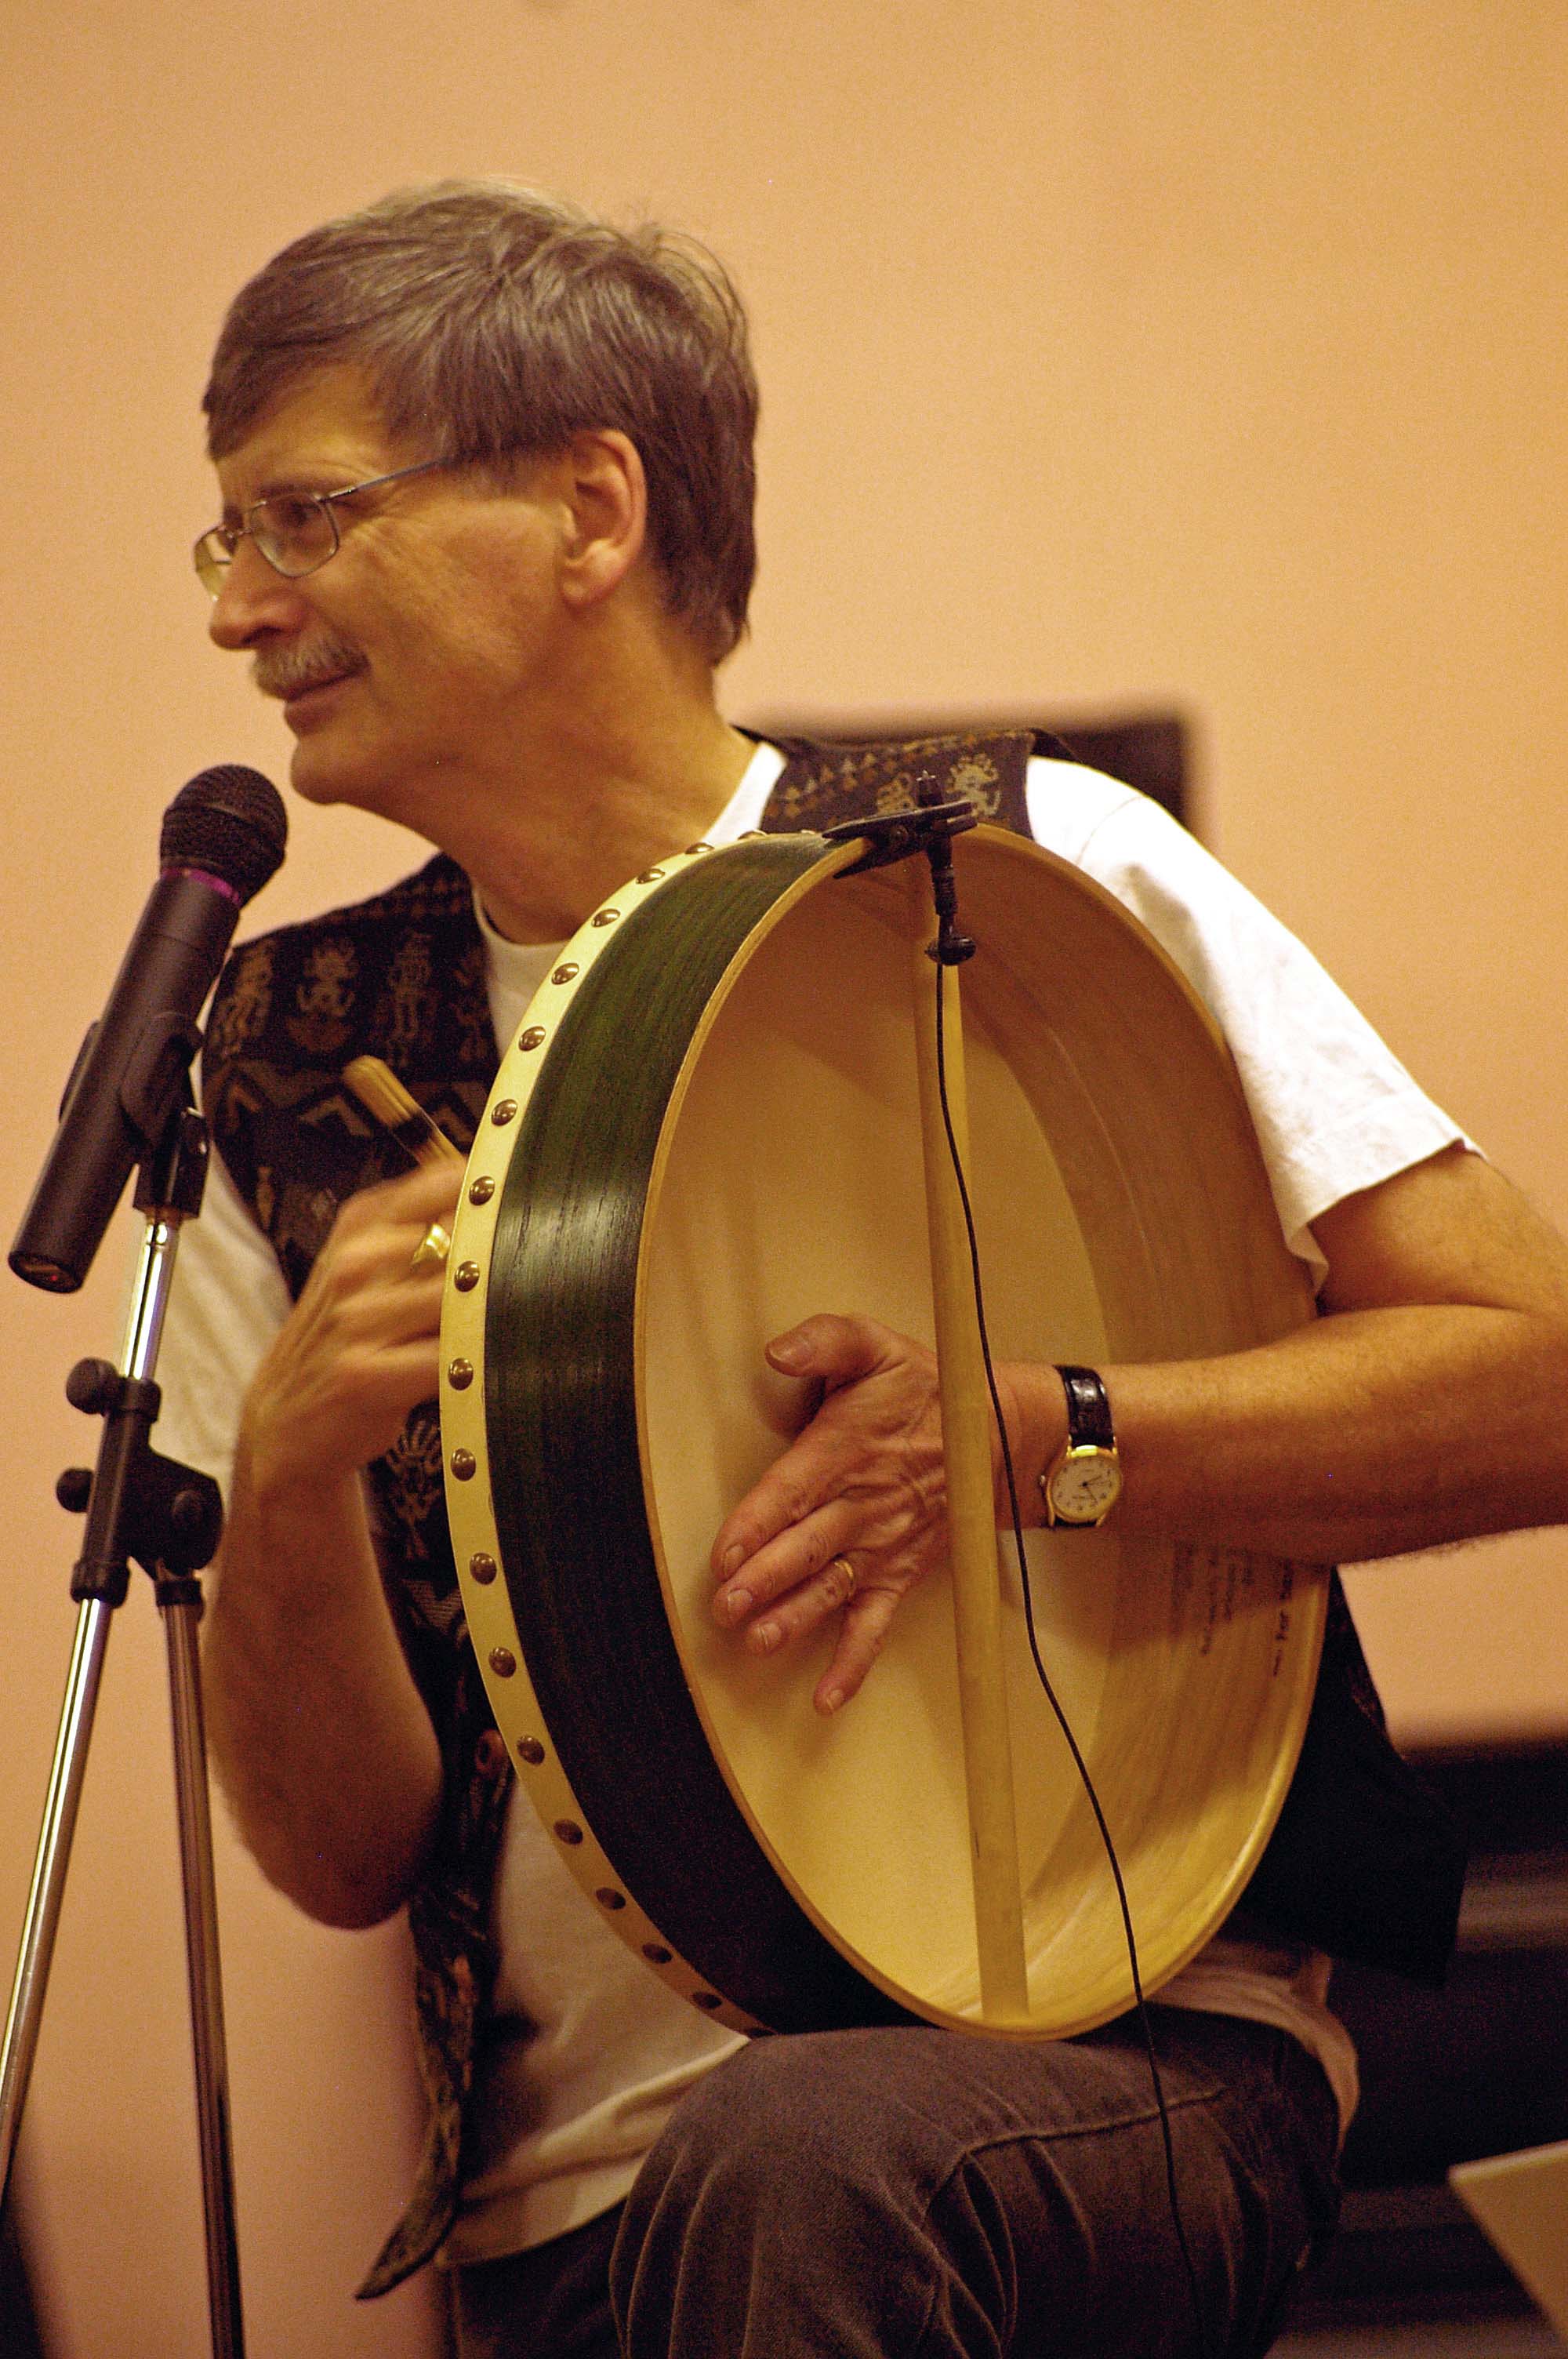 David playing the Bodhran